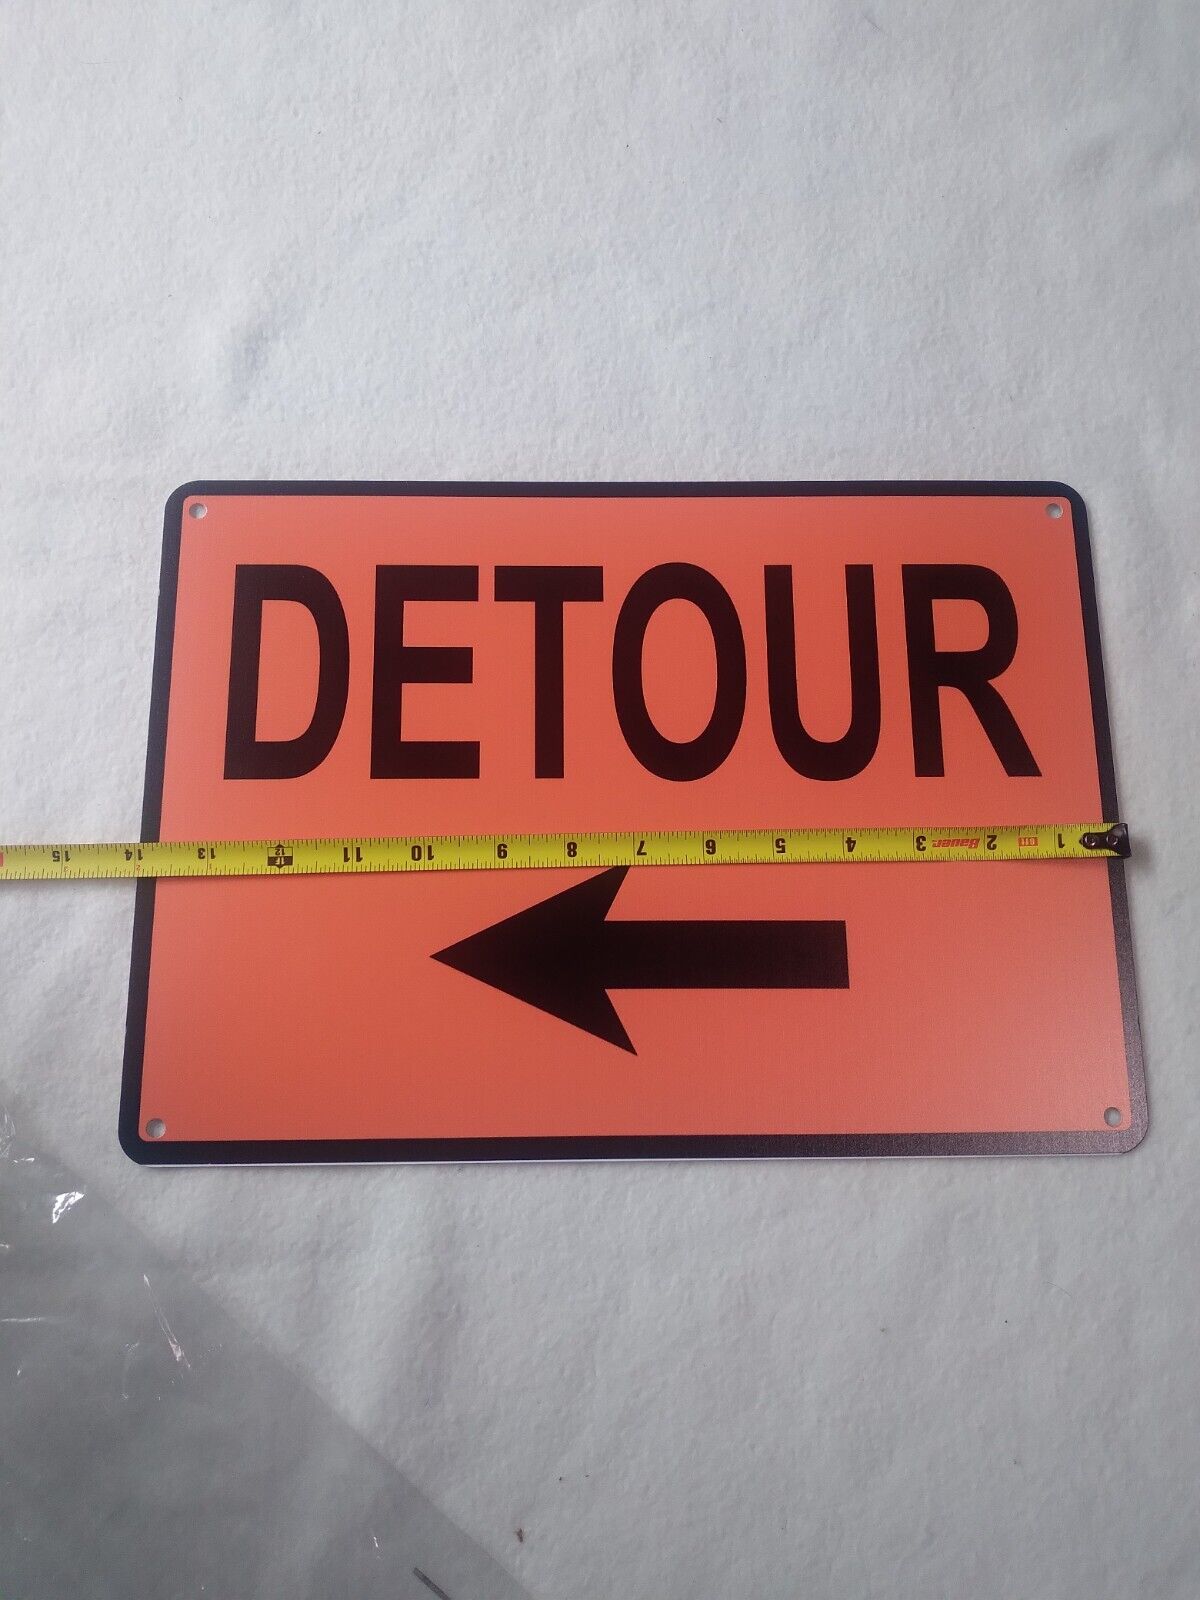 Left Arrow Detour 2 Traffic Sign Aluminum Metal Sign 10 in x 14 in - New